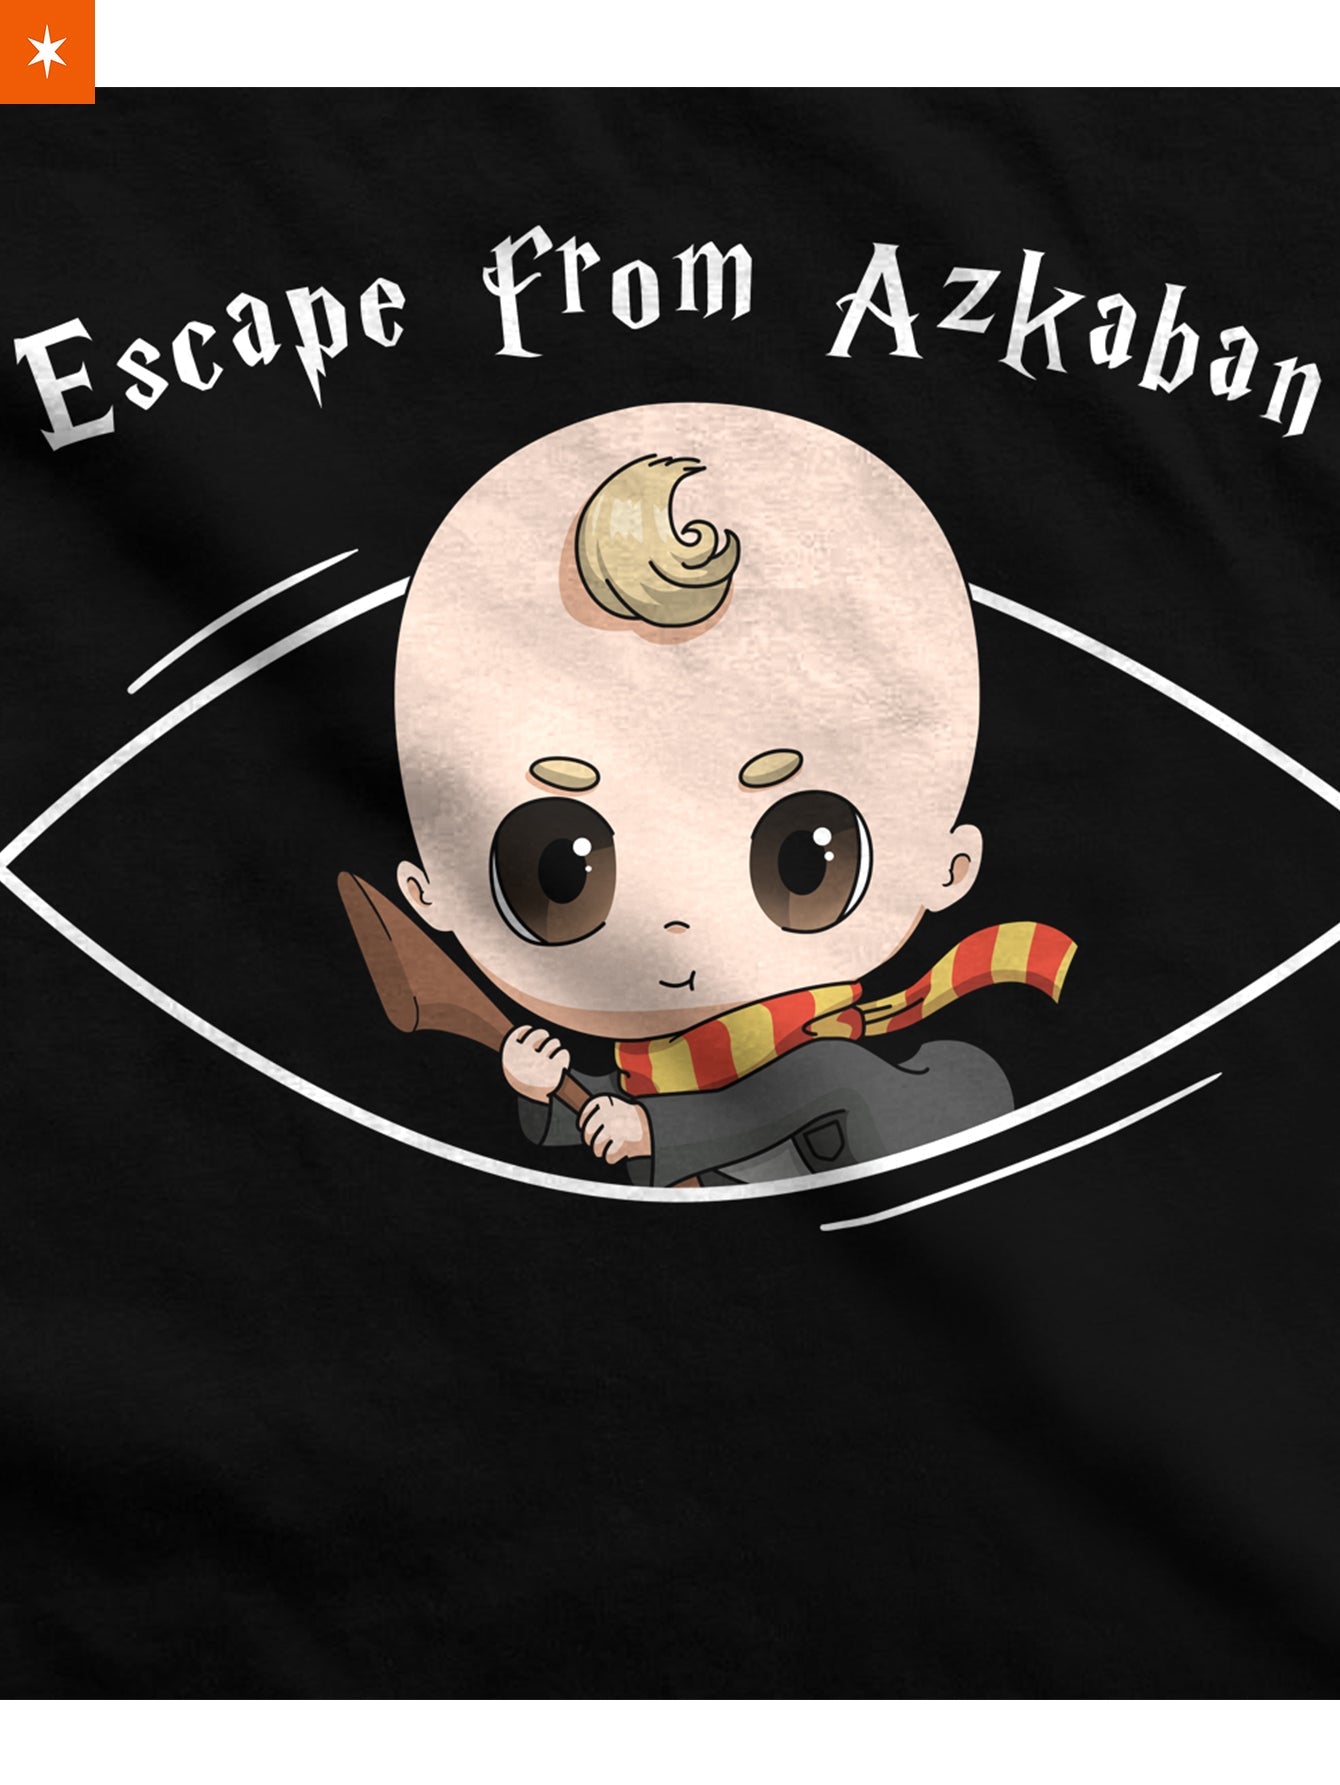 Fandomaniax - Escape From Azkaban Maternity T-Shirt